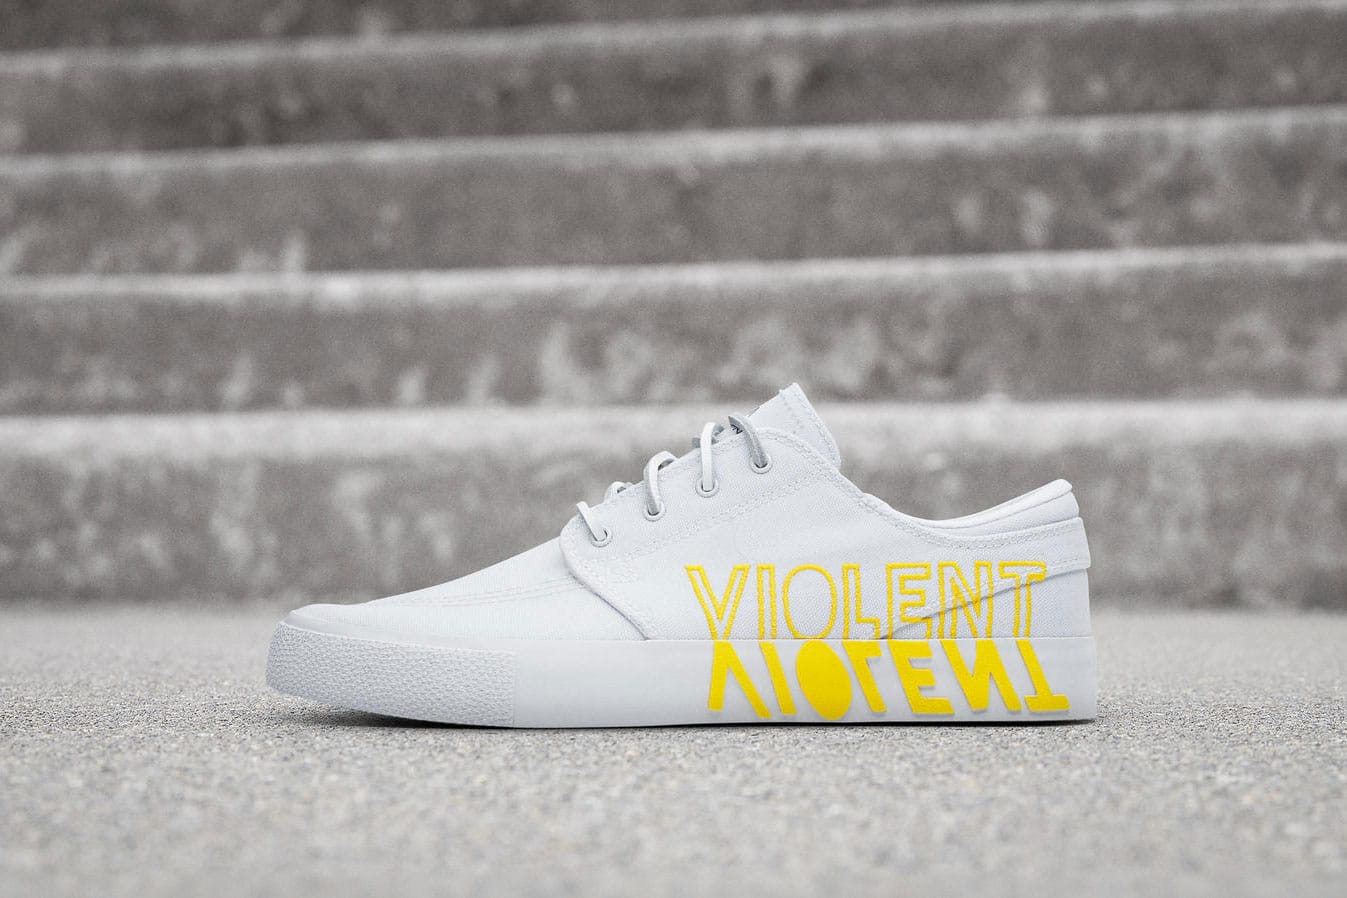 Nike SB Zoom Violent Femmes Stefan Janoski Info | Hypebeast